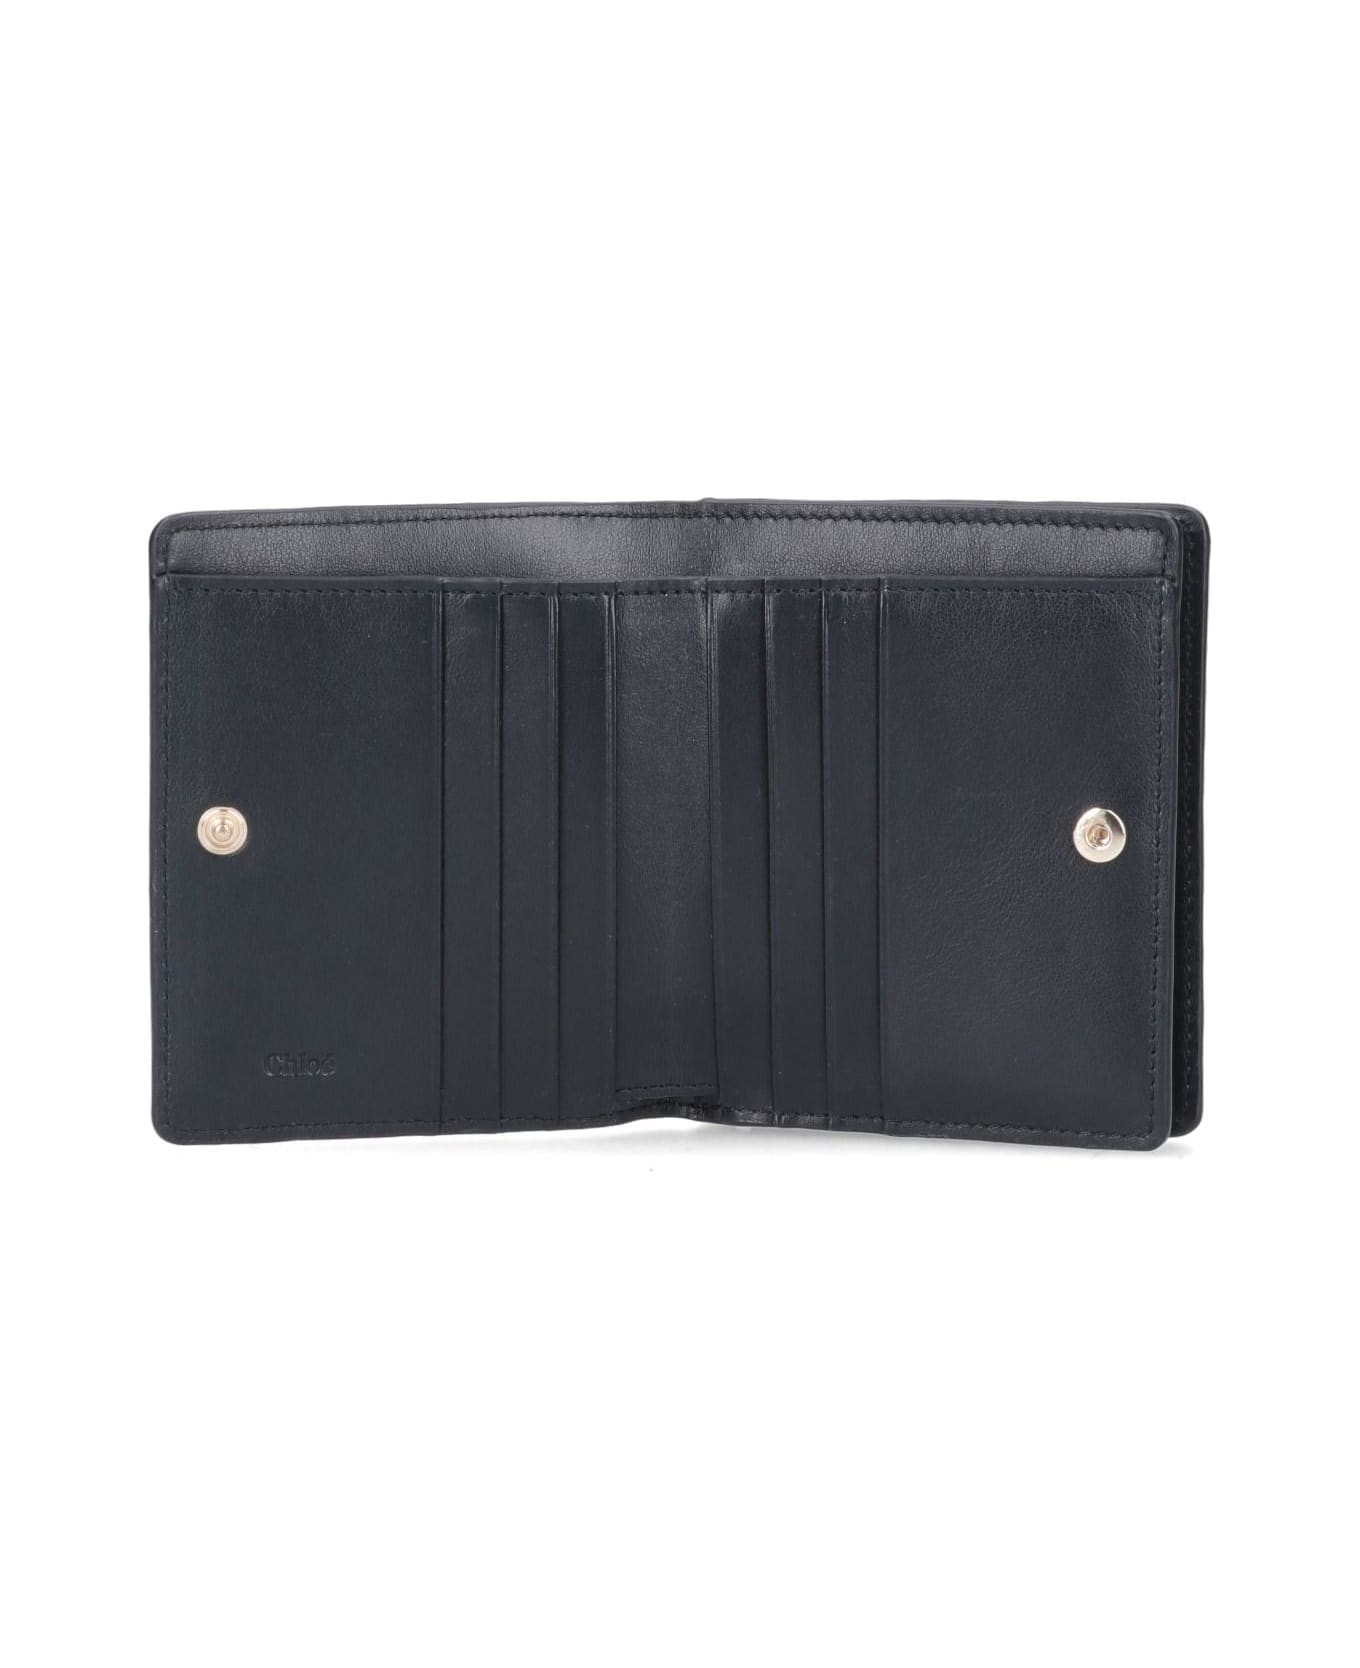 Chloé Sense Compact Wallet - Black 財布